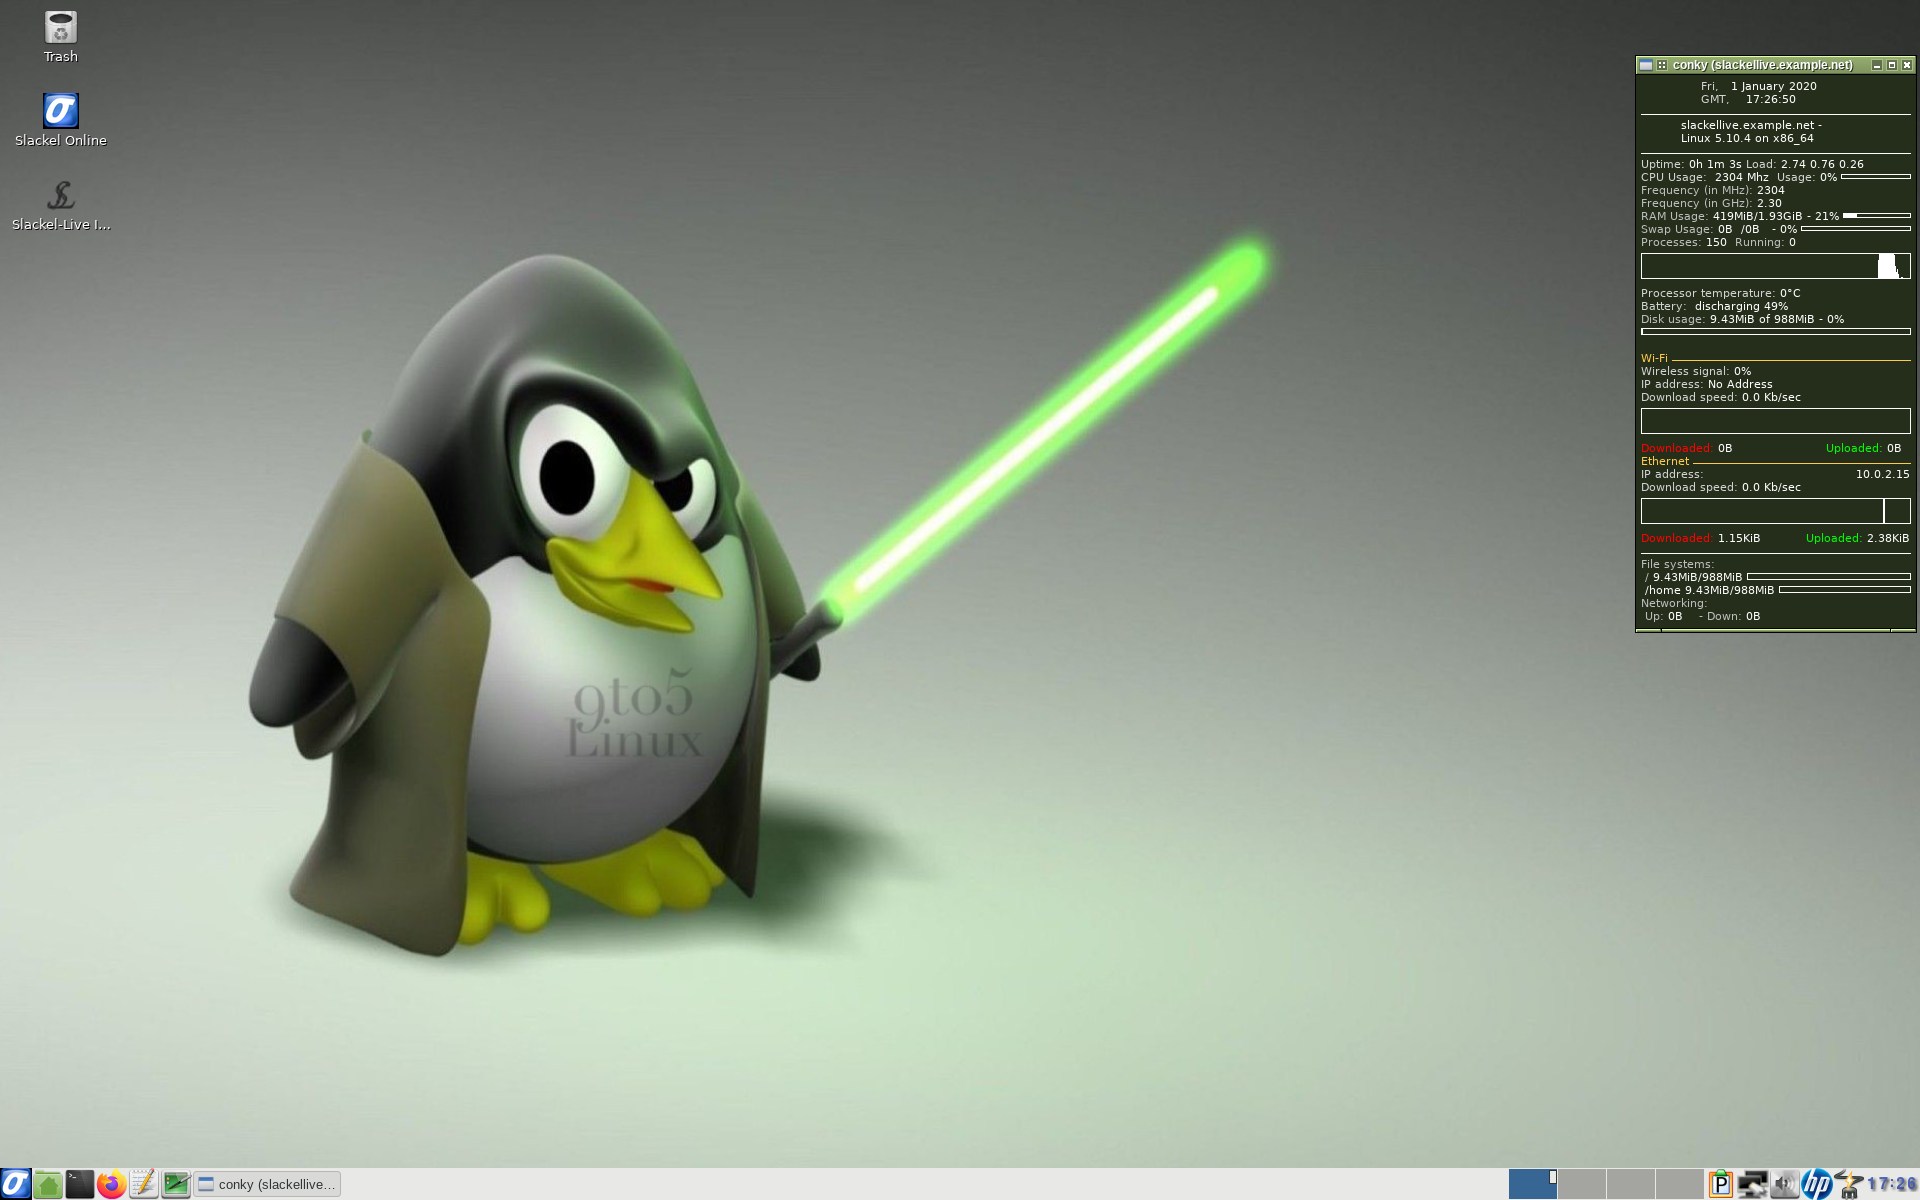 Slackware-Based Slackel 7.4 Released with Linux Kernel 5.10 LTS, Full Portability